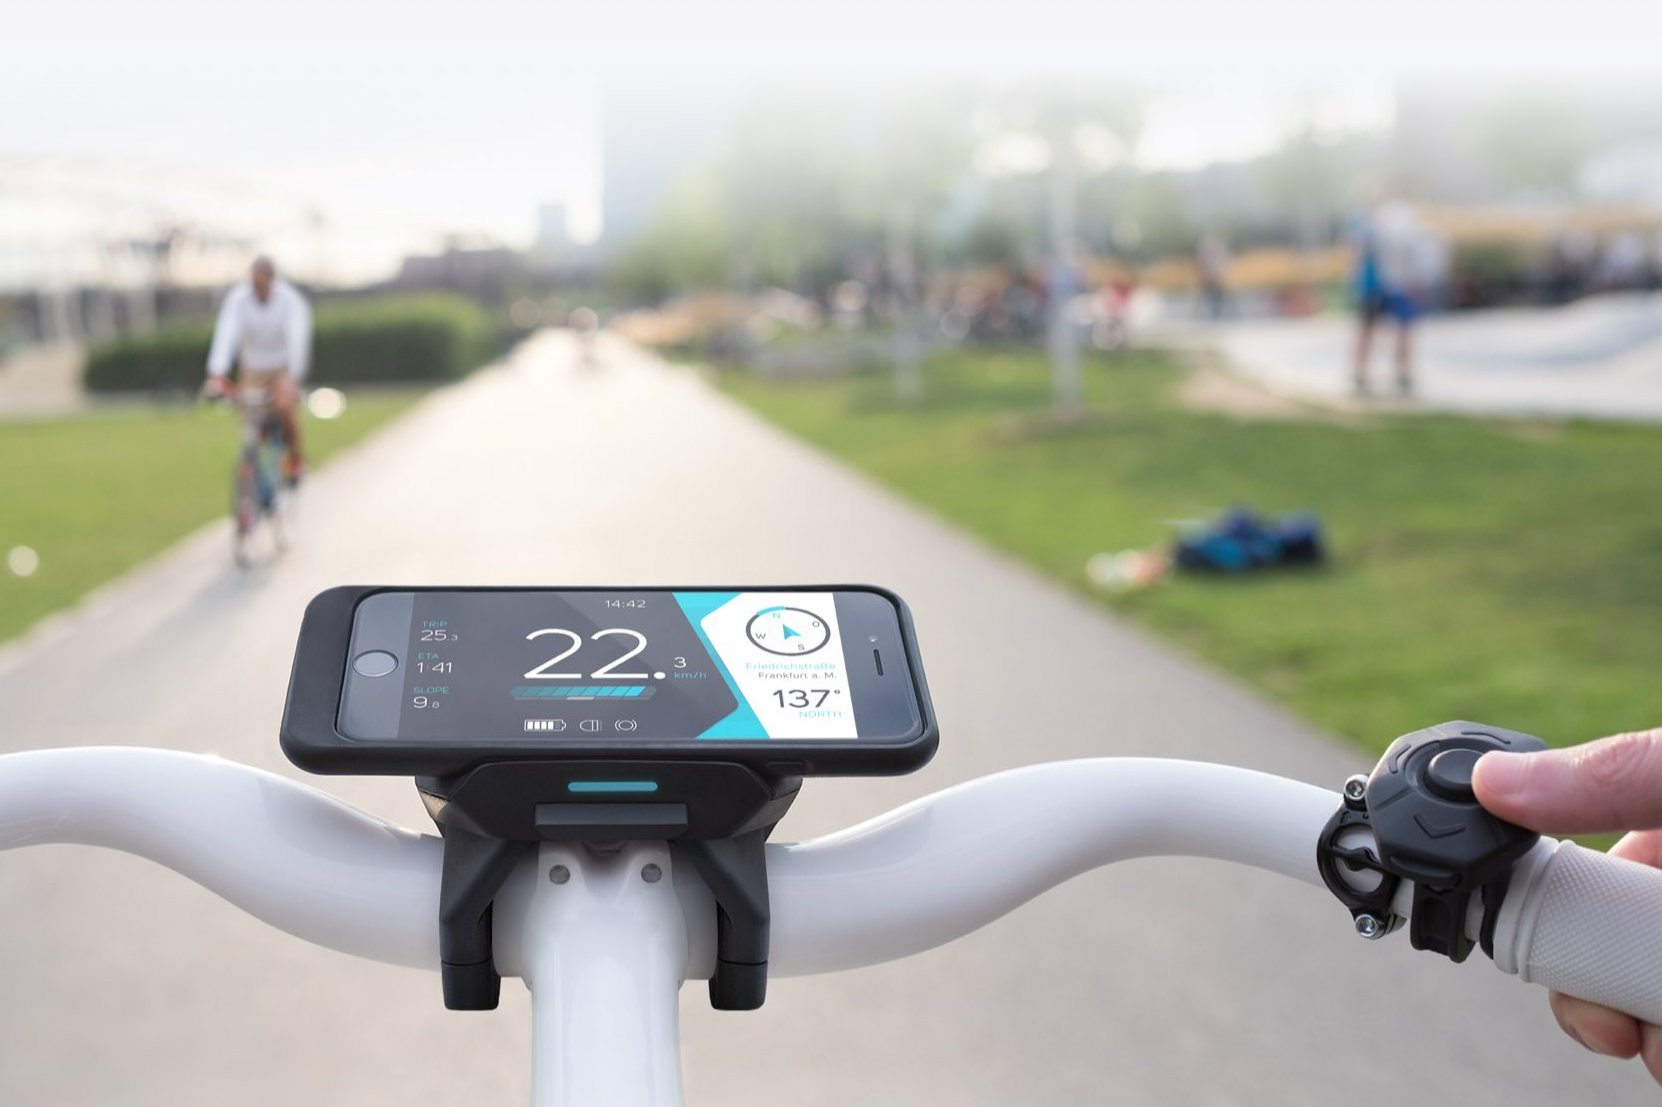 cobi connected biking bike routes navigation render outdoor